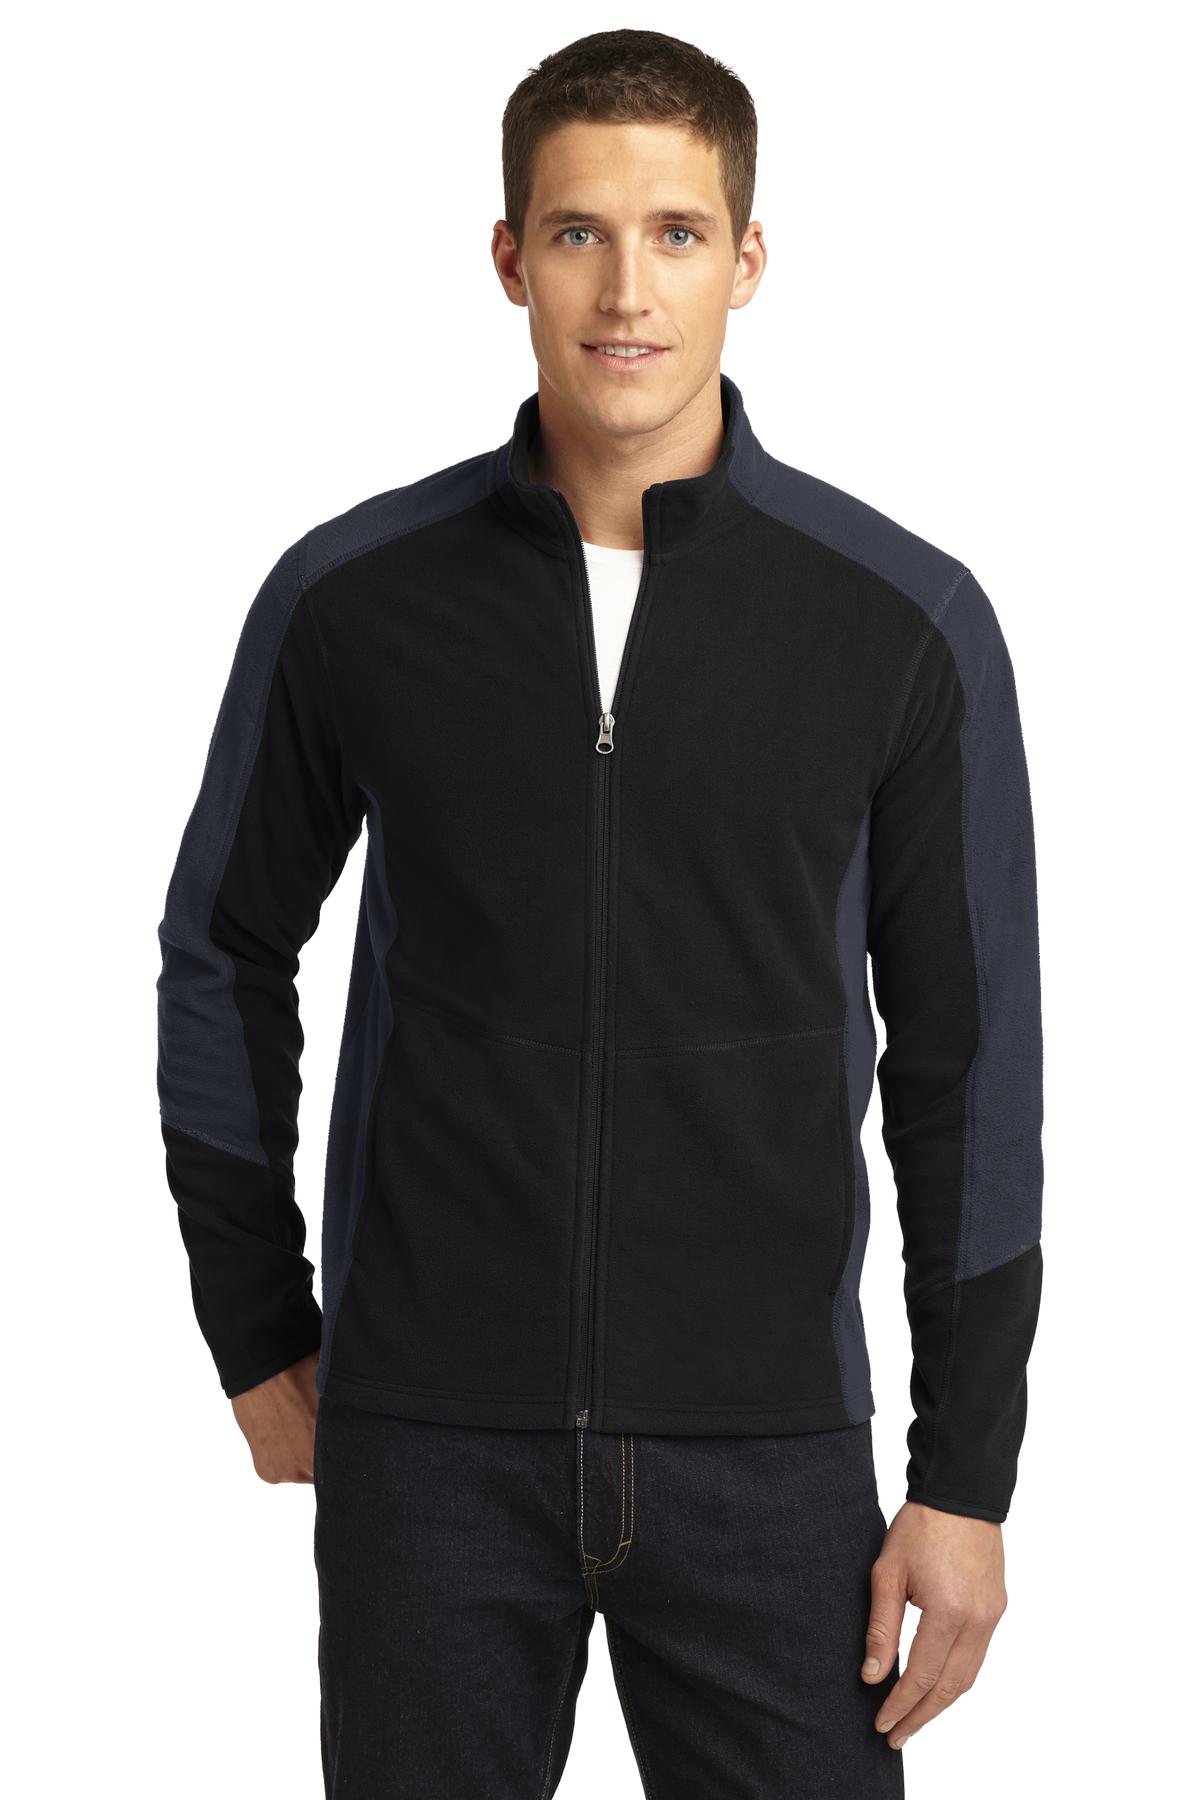 Port Authority Outerwear, Sweat shirts & Fleece for Hospitality ® Colorblock Microfleece Jacket.-Port Authority